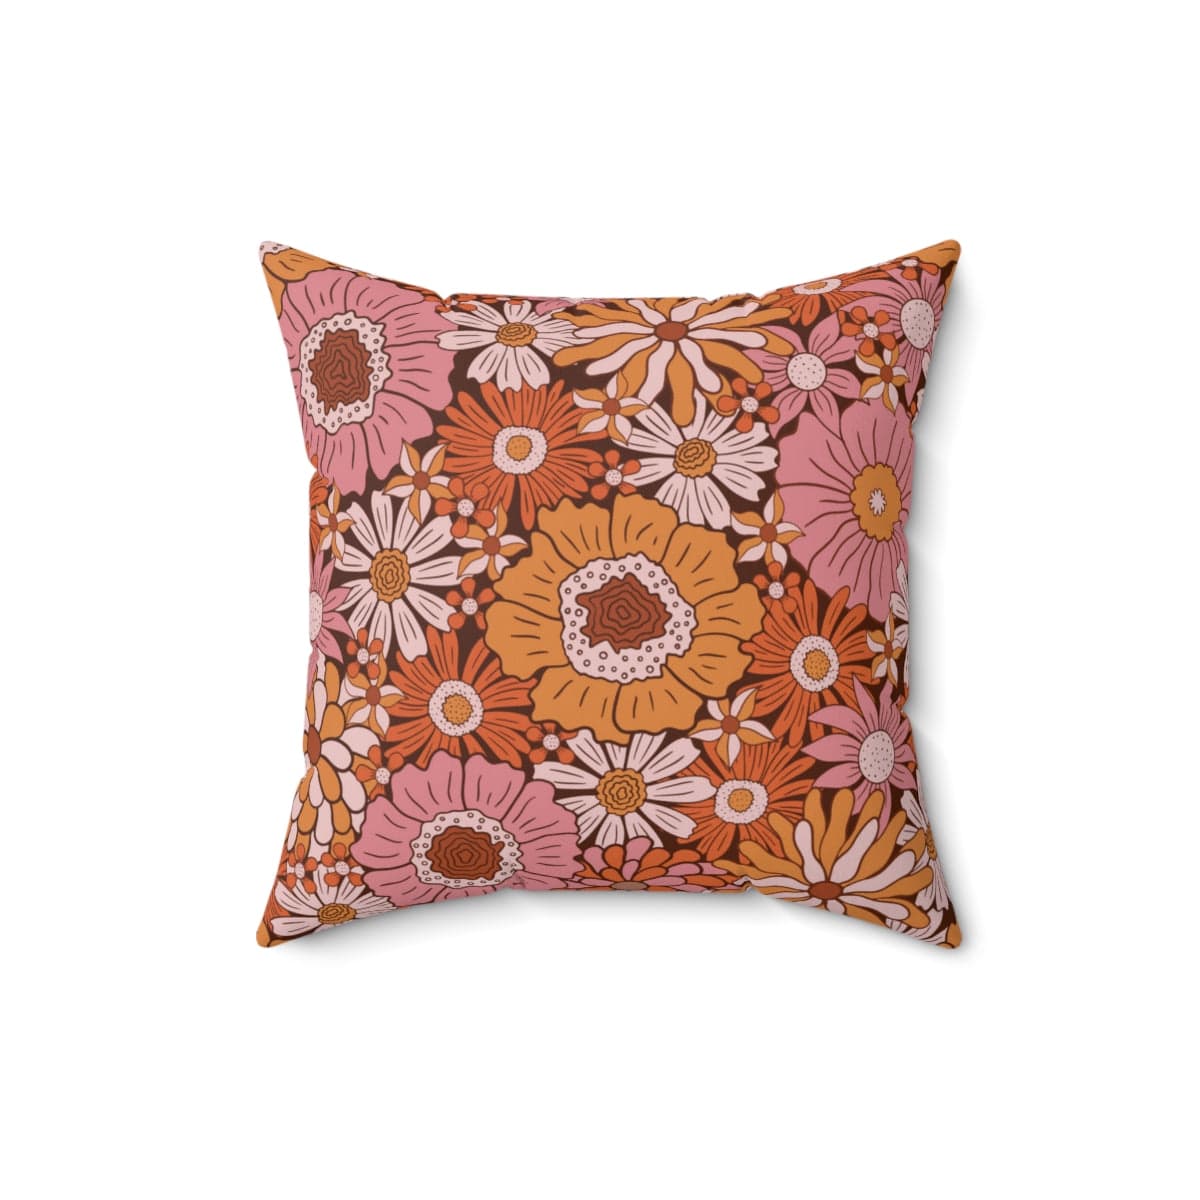 Kate McEnroe New York Mid Century Modern Groovy Floral Pillow Home Decor 16" × 16" 21007280403940026370